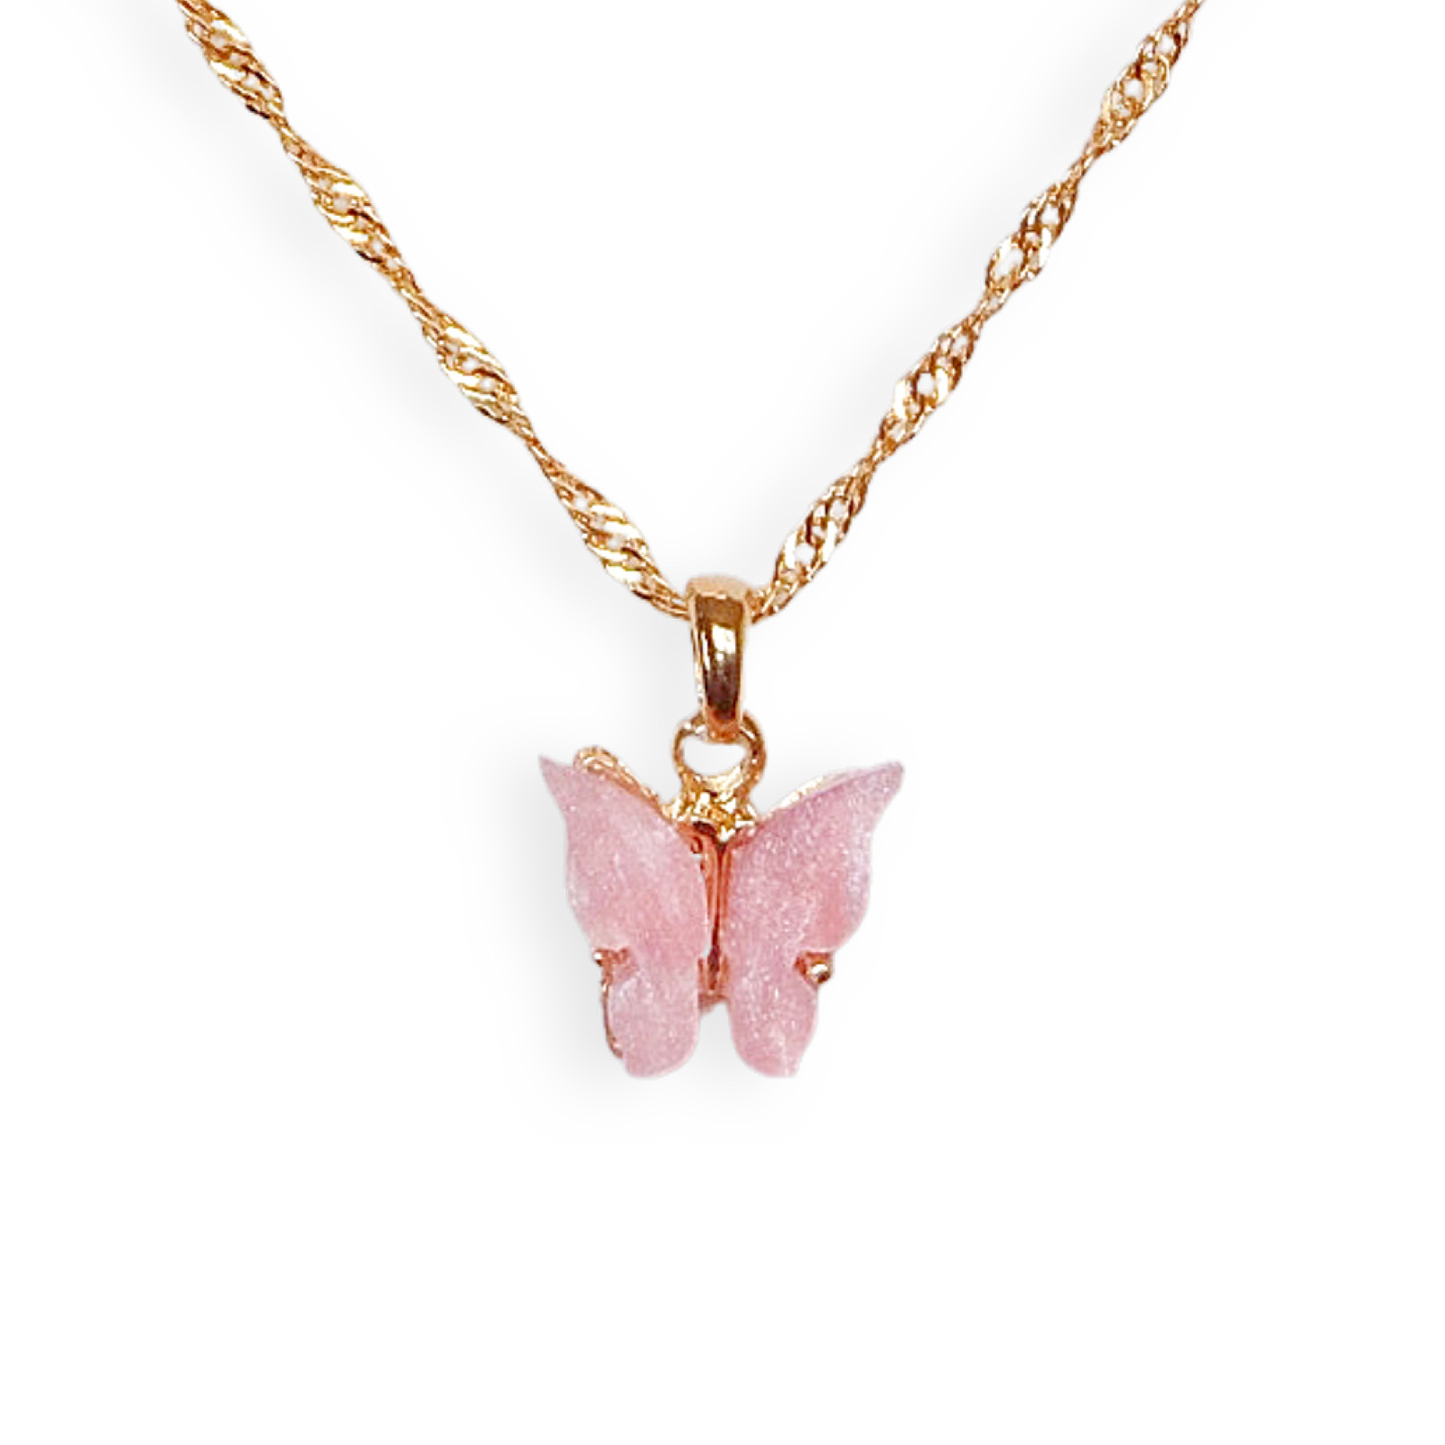 Butterfly Garden Necklace